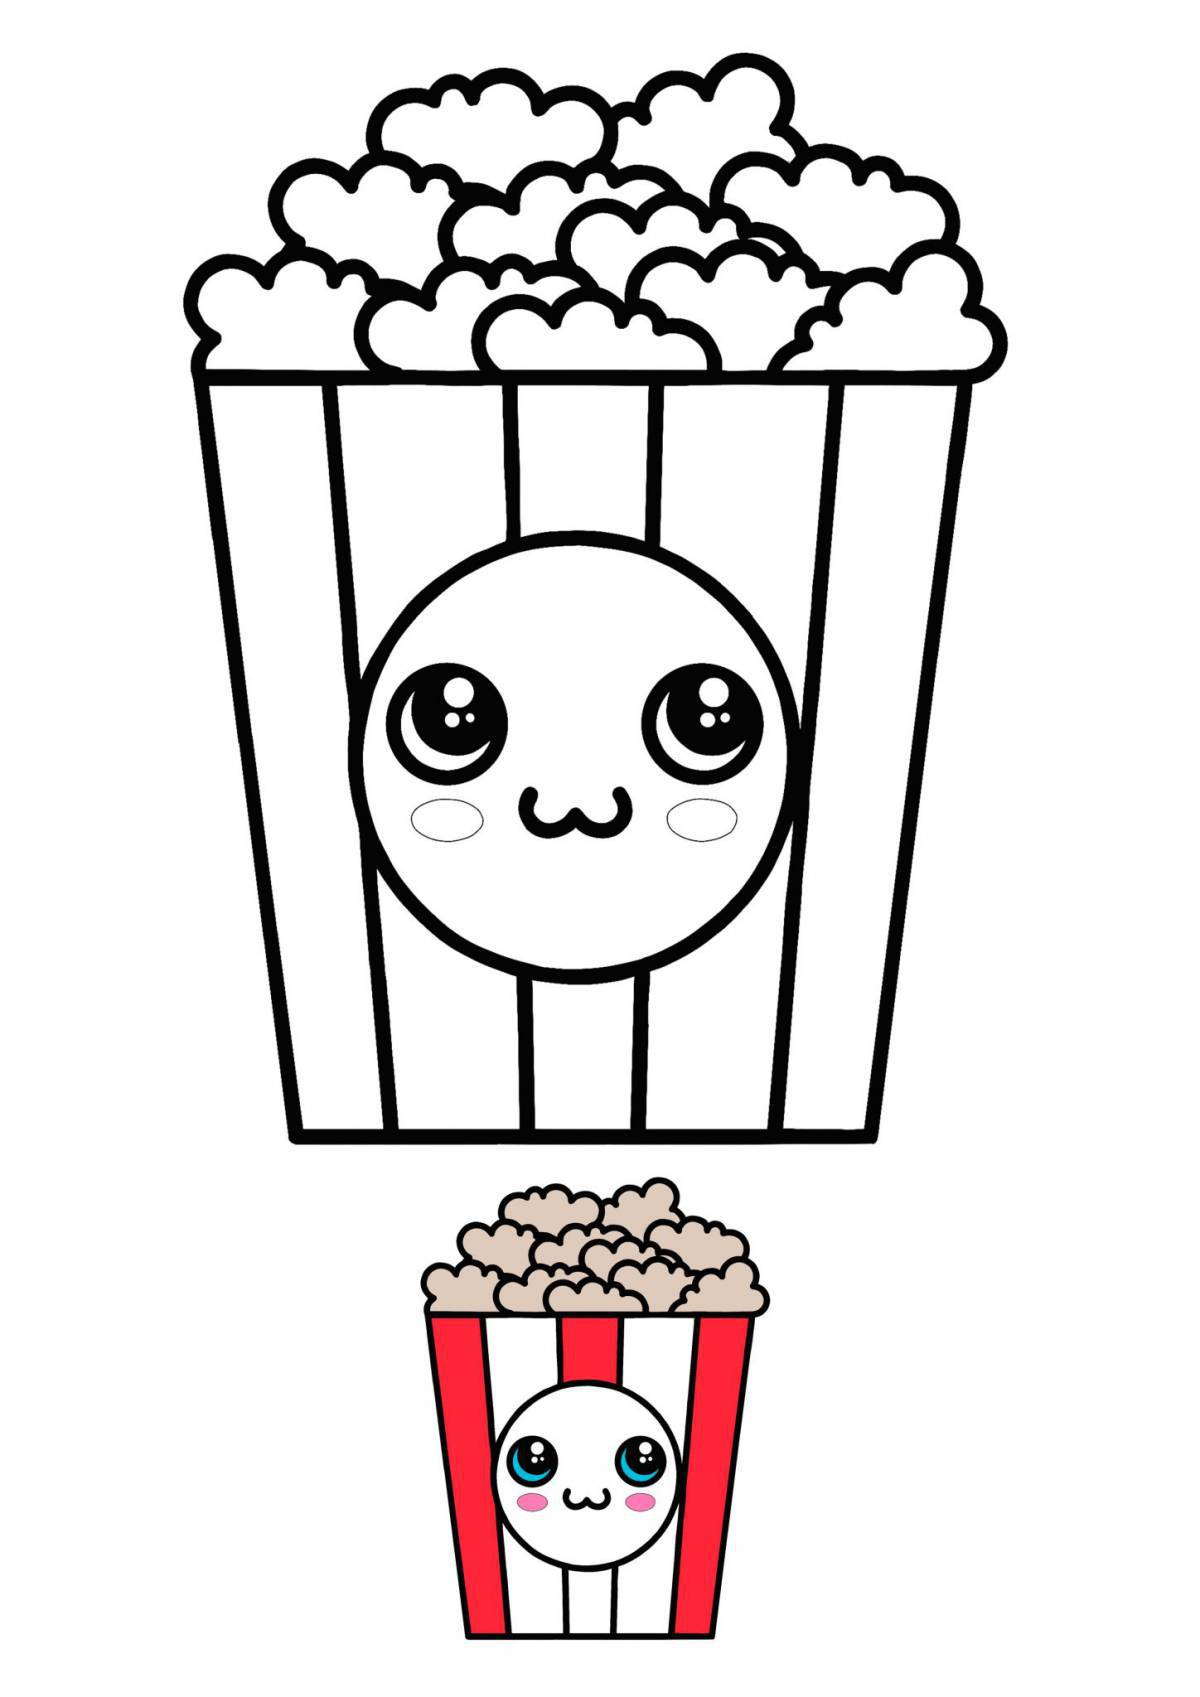 Crispy popcorn coloring page